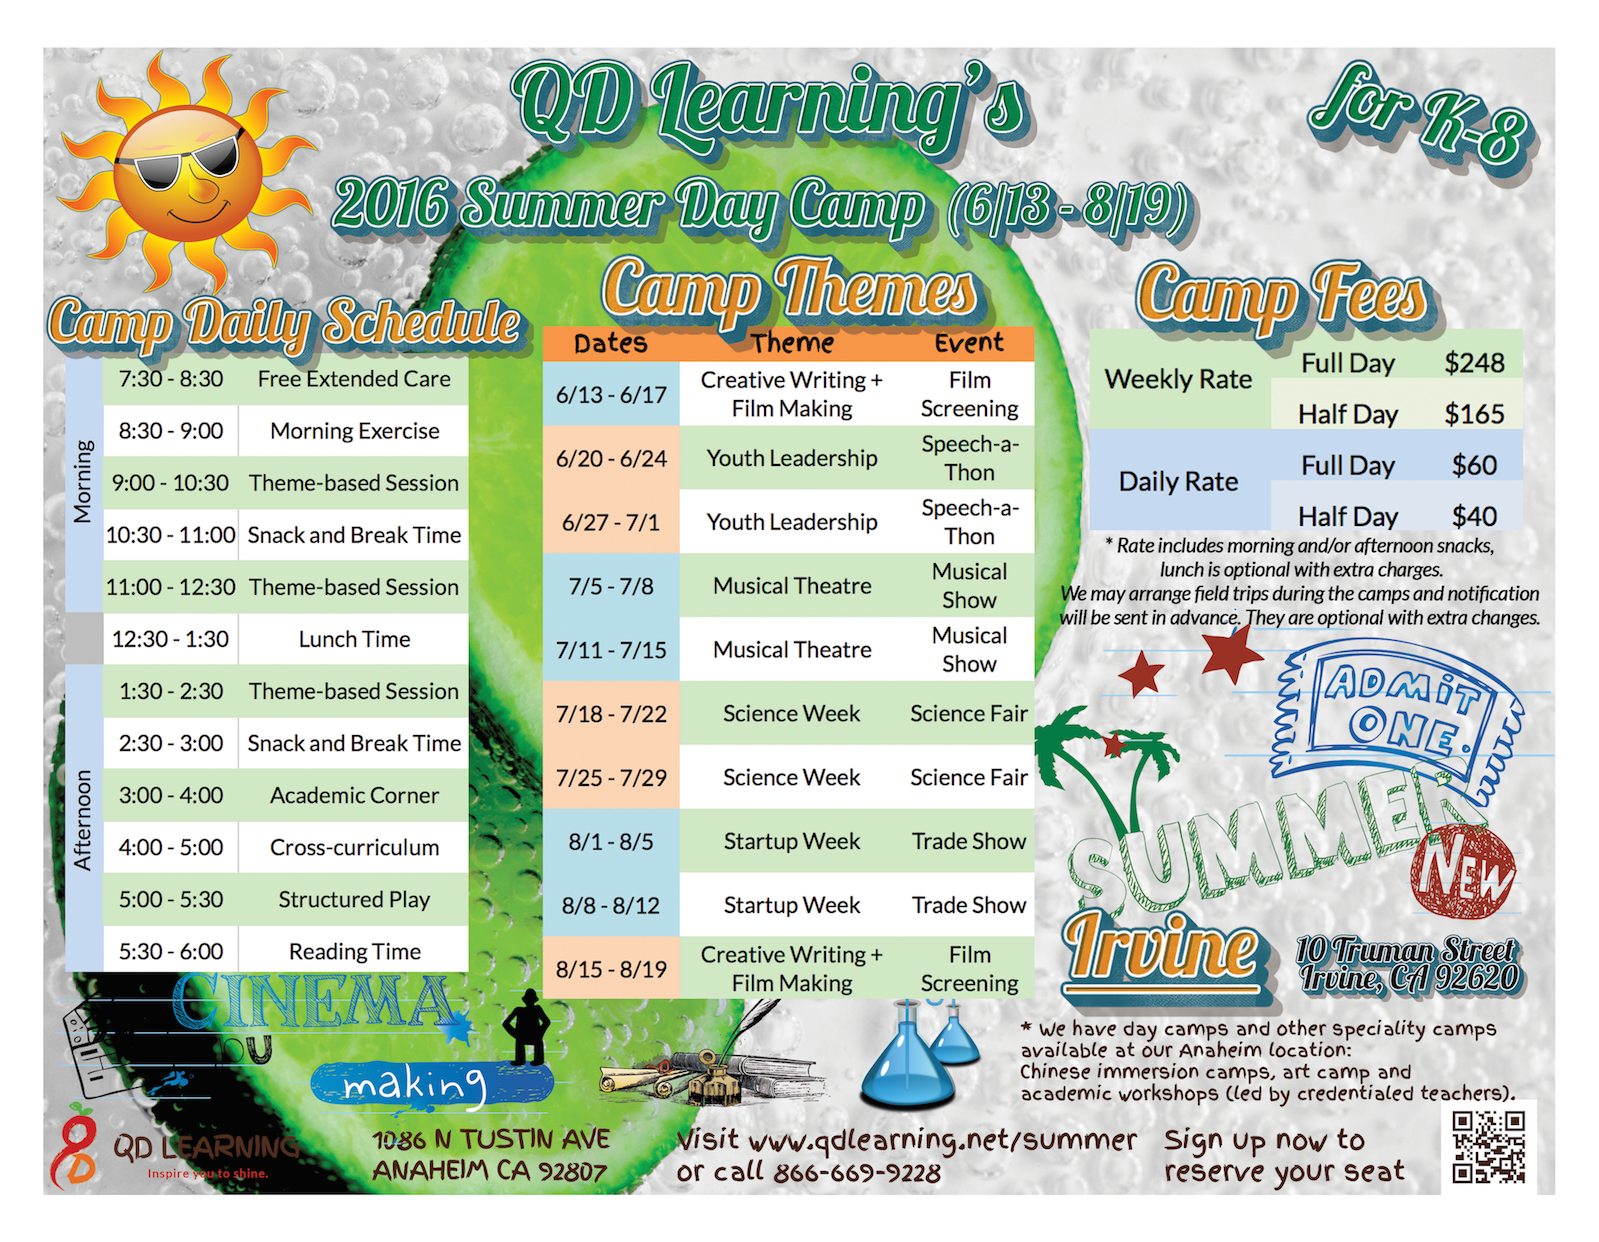 Summer Camp Schedule. Daily Schedule for Camp. Упражнения по теме Summer Camp. Summer Camp фанфик. Кэмп афиша расписание